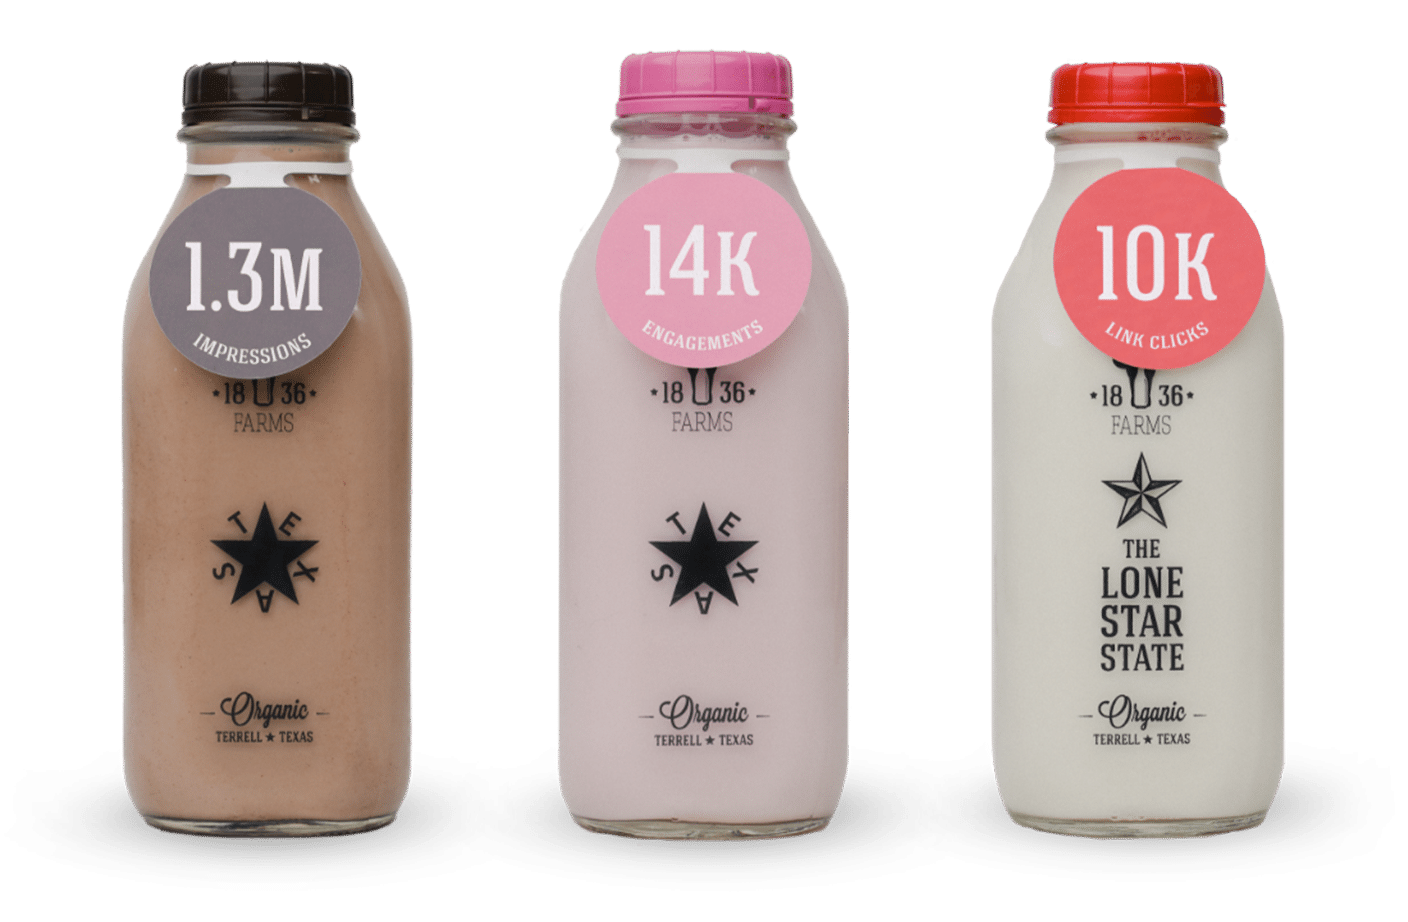 1836 Farms Milk Bottles - Chocolate Milk Bottle Statistic 1.3 Million Impressions - Strawberry Milk Bottle - Stat 14 Thousand Engagements - Regular Milk Bottle - Stat 10 Thousand Link Clicks